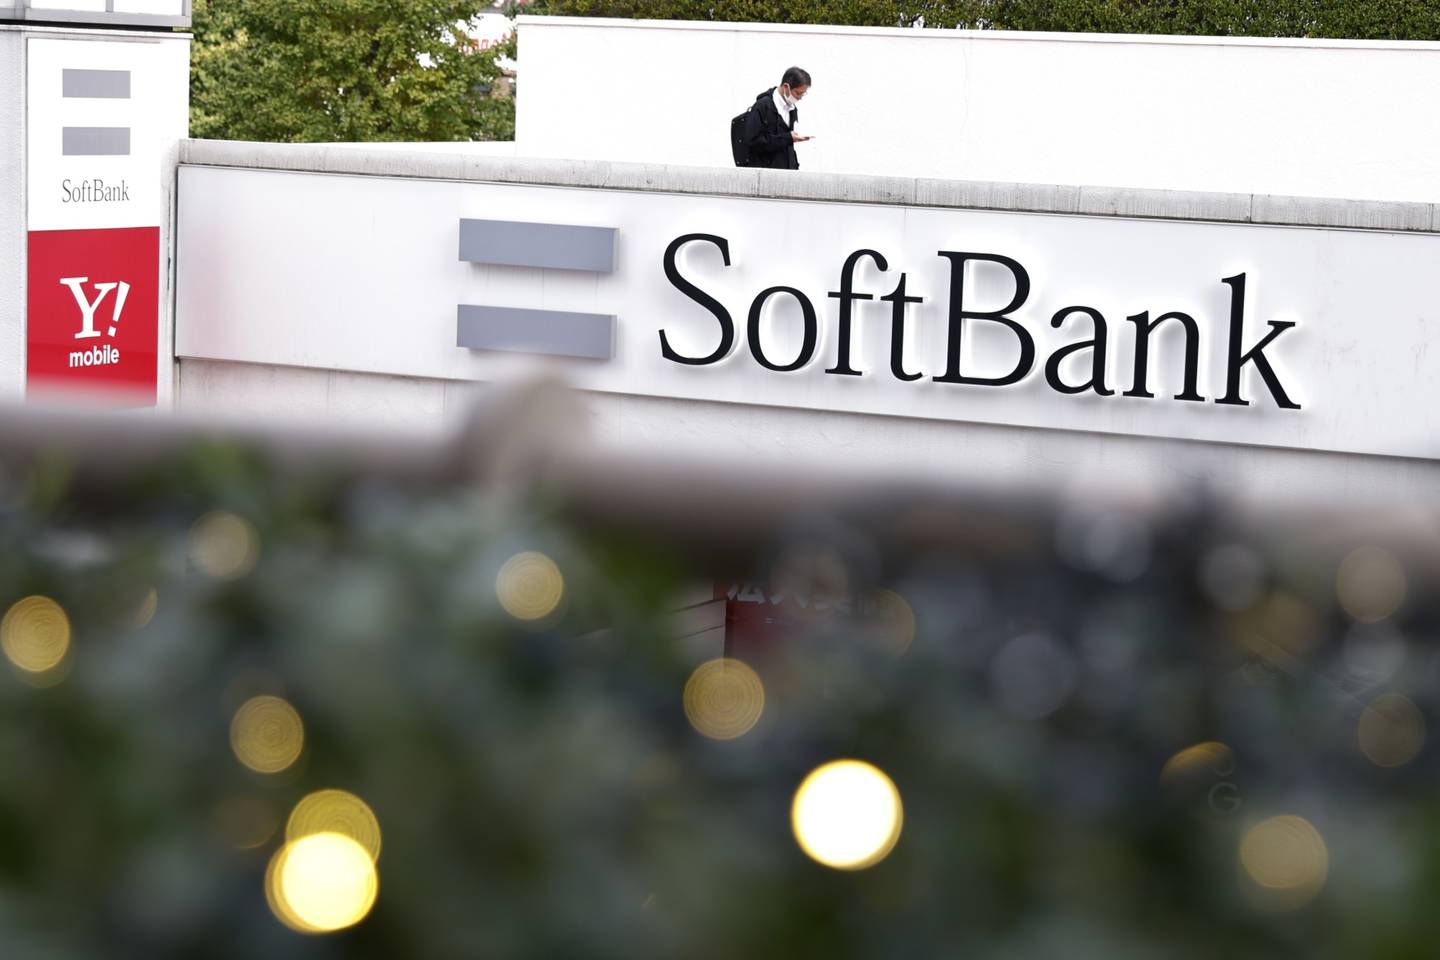 El logo de SoftBank